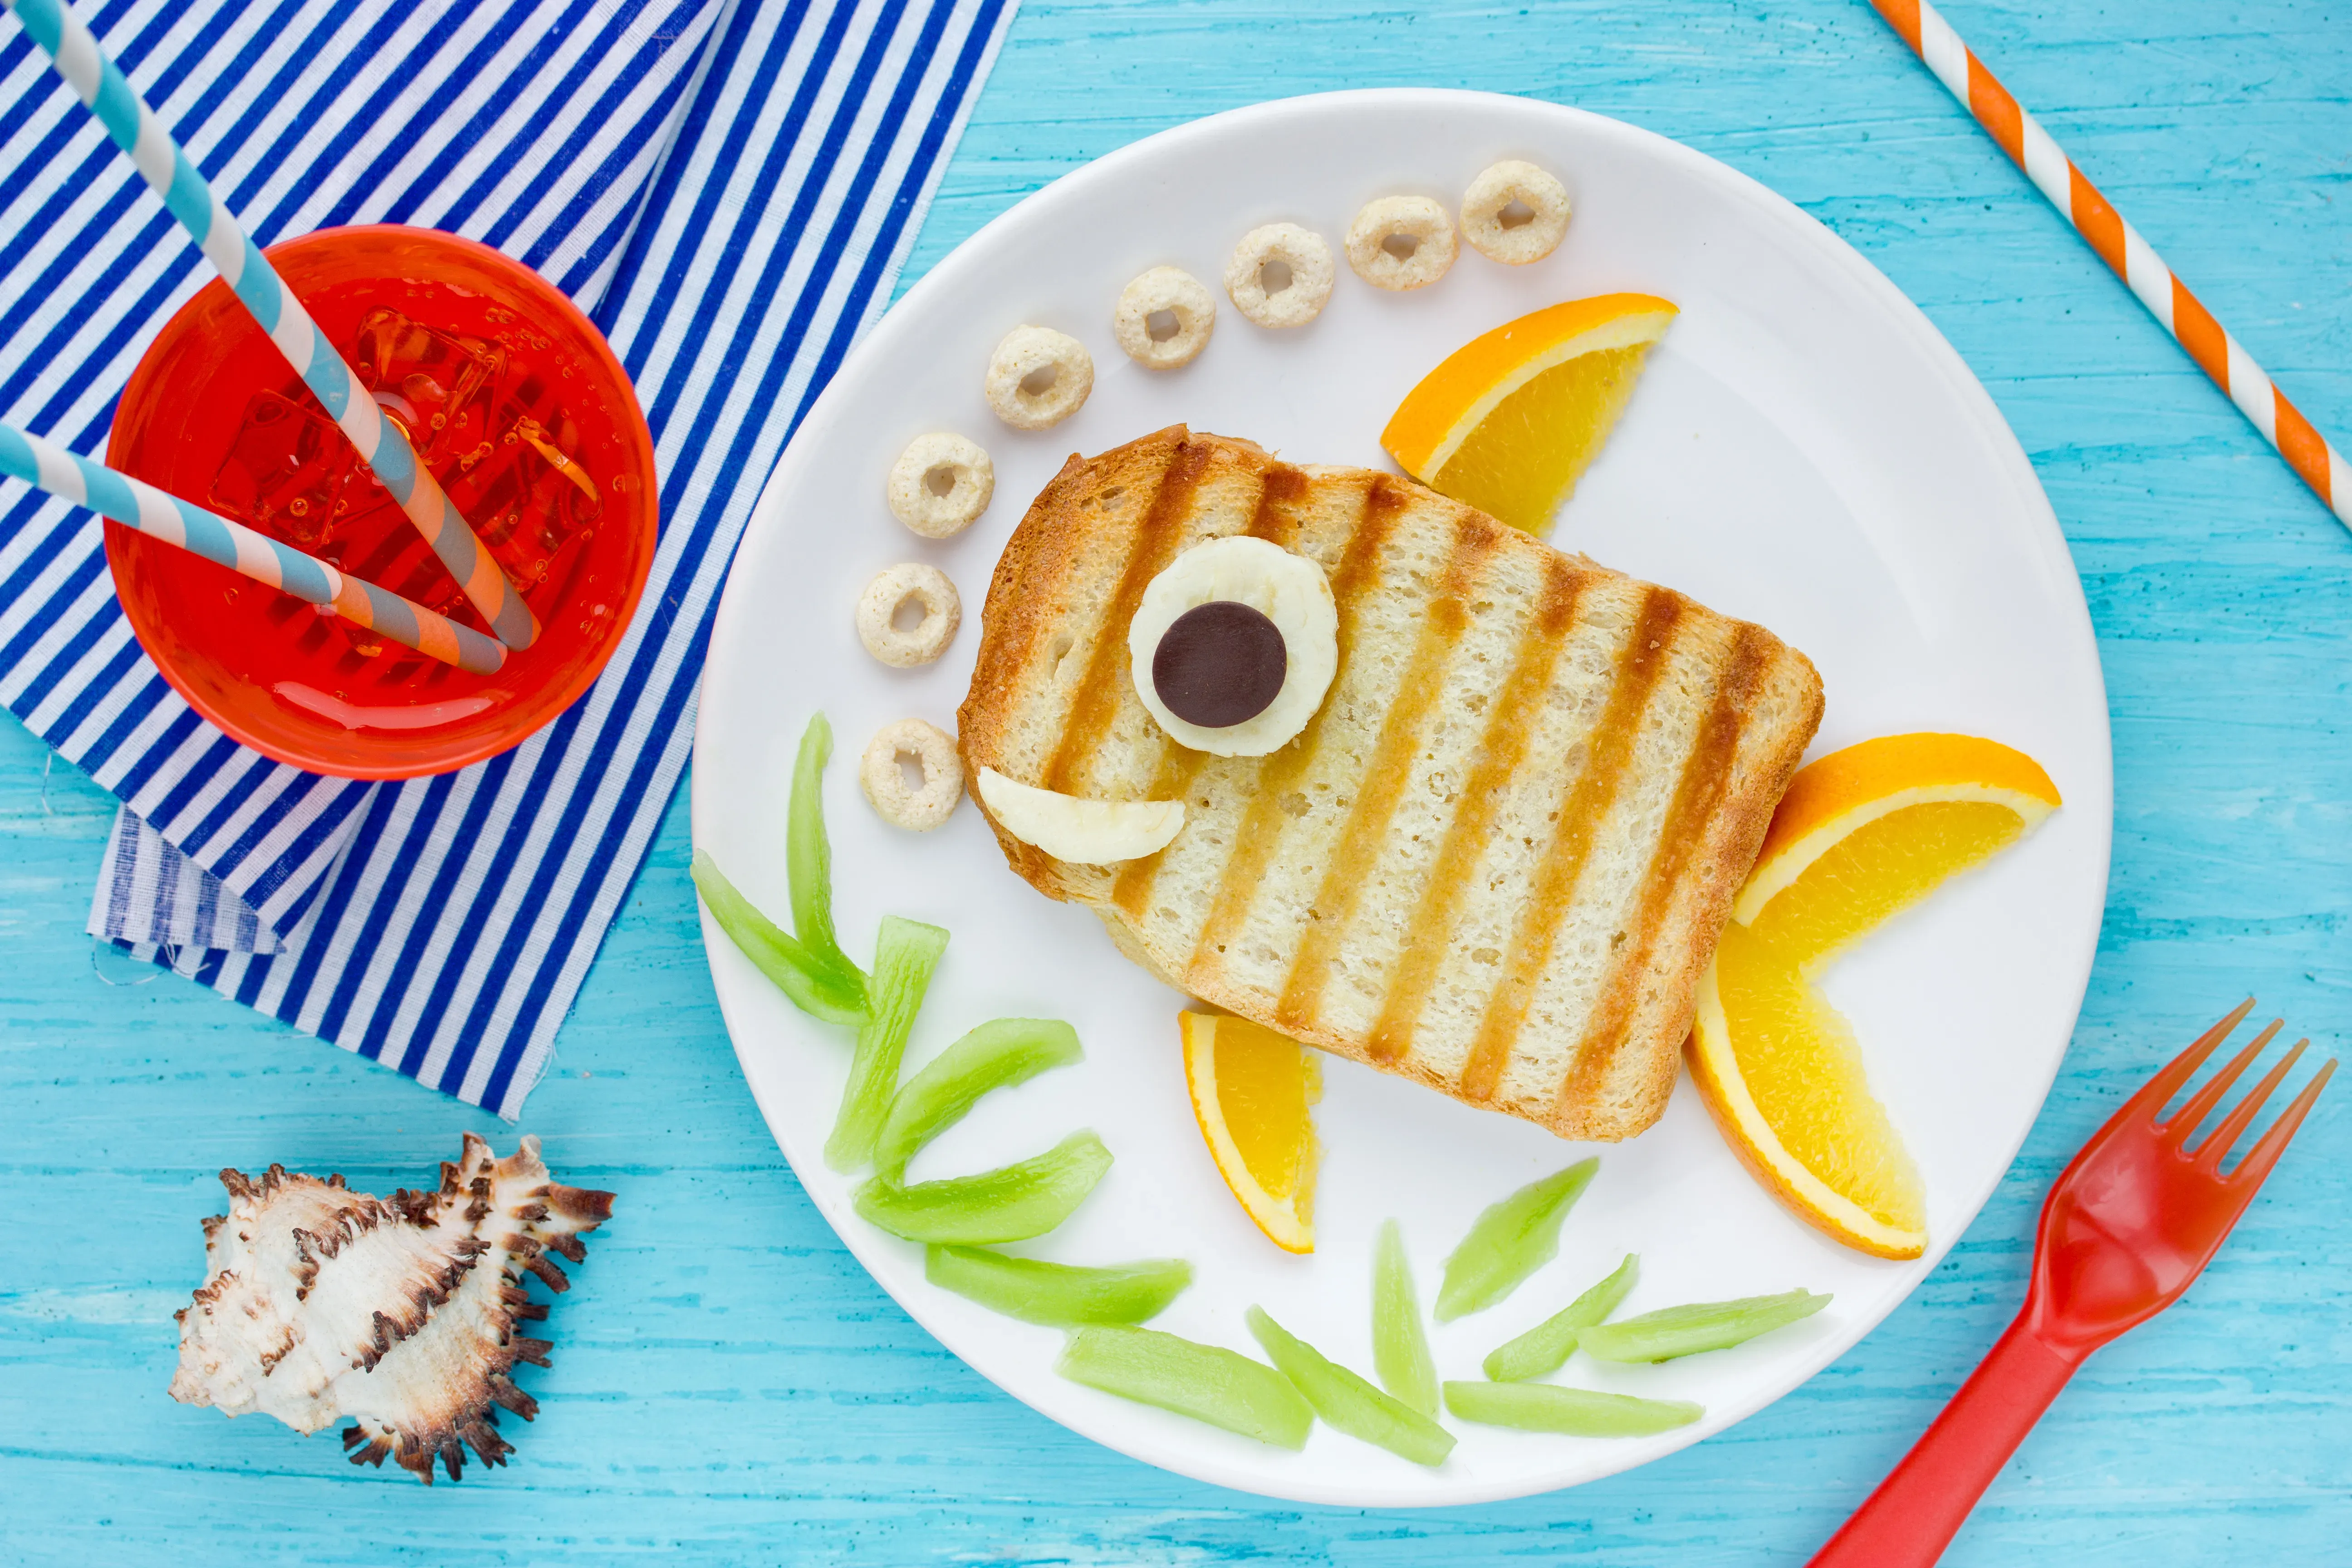 Edible Food Art: Easy Ways To Make Mealtime Fun For Kids